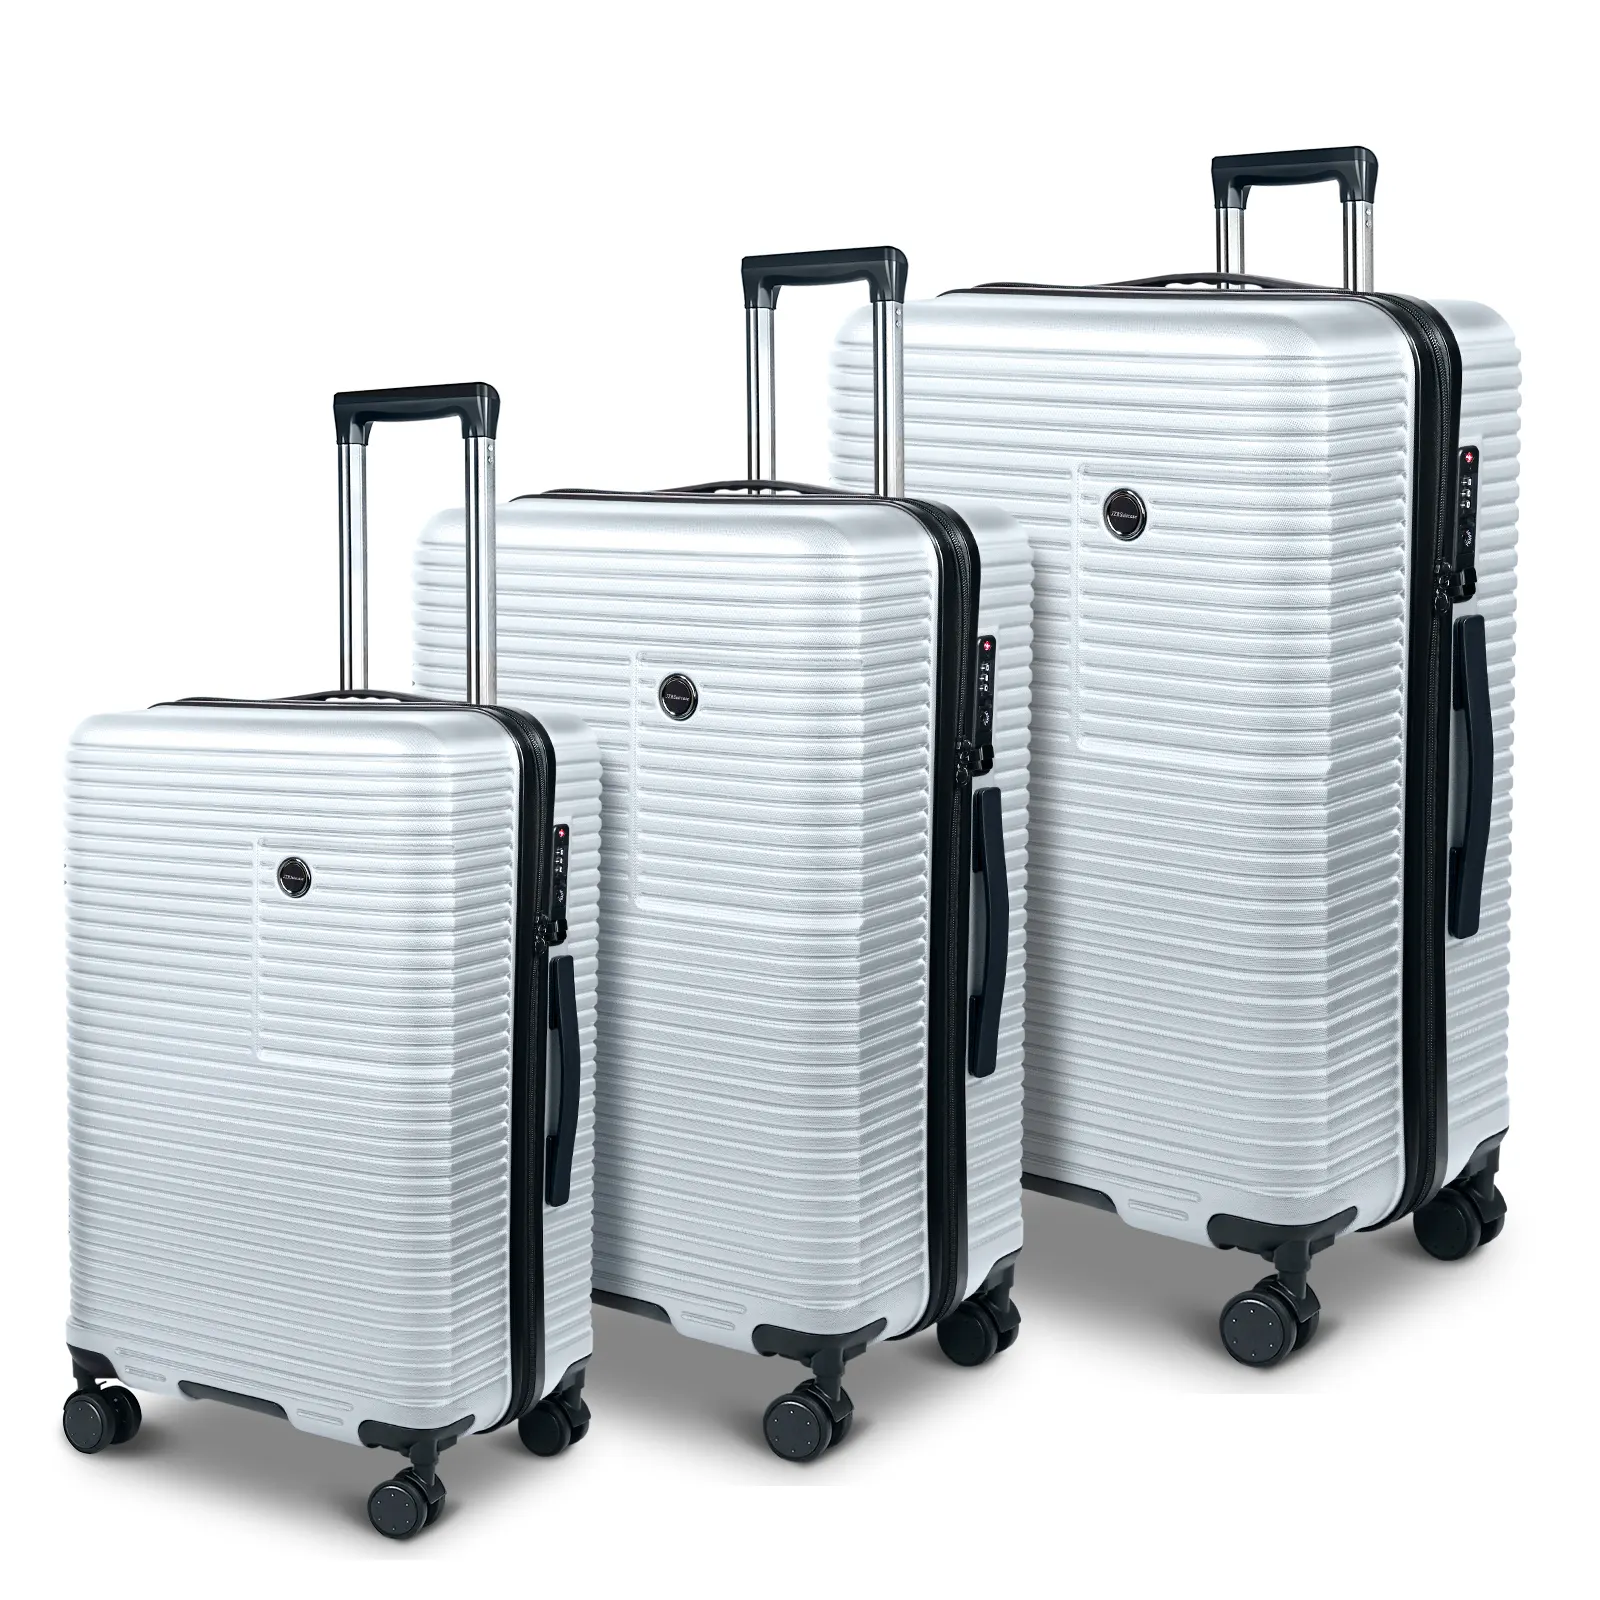 ODM OEM נסיעות זמן מטען שמיים נסיעות מזוודות מזוודת מזוודות לאישה